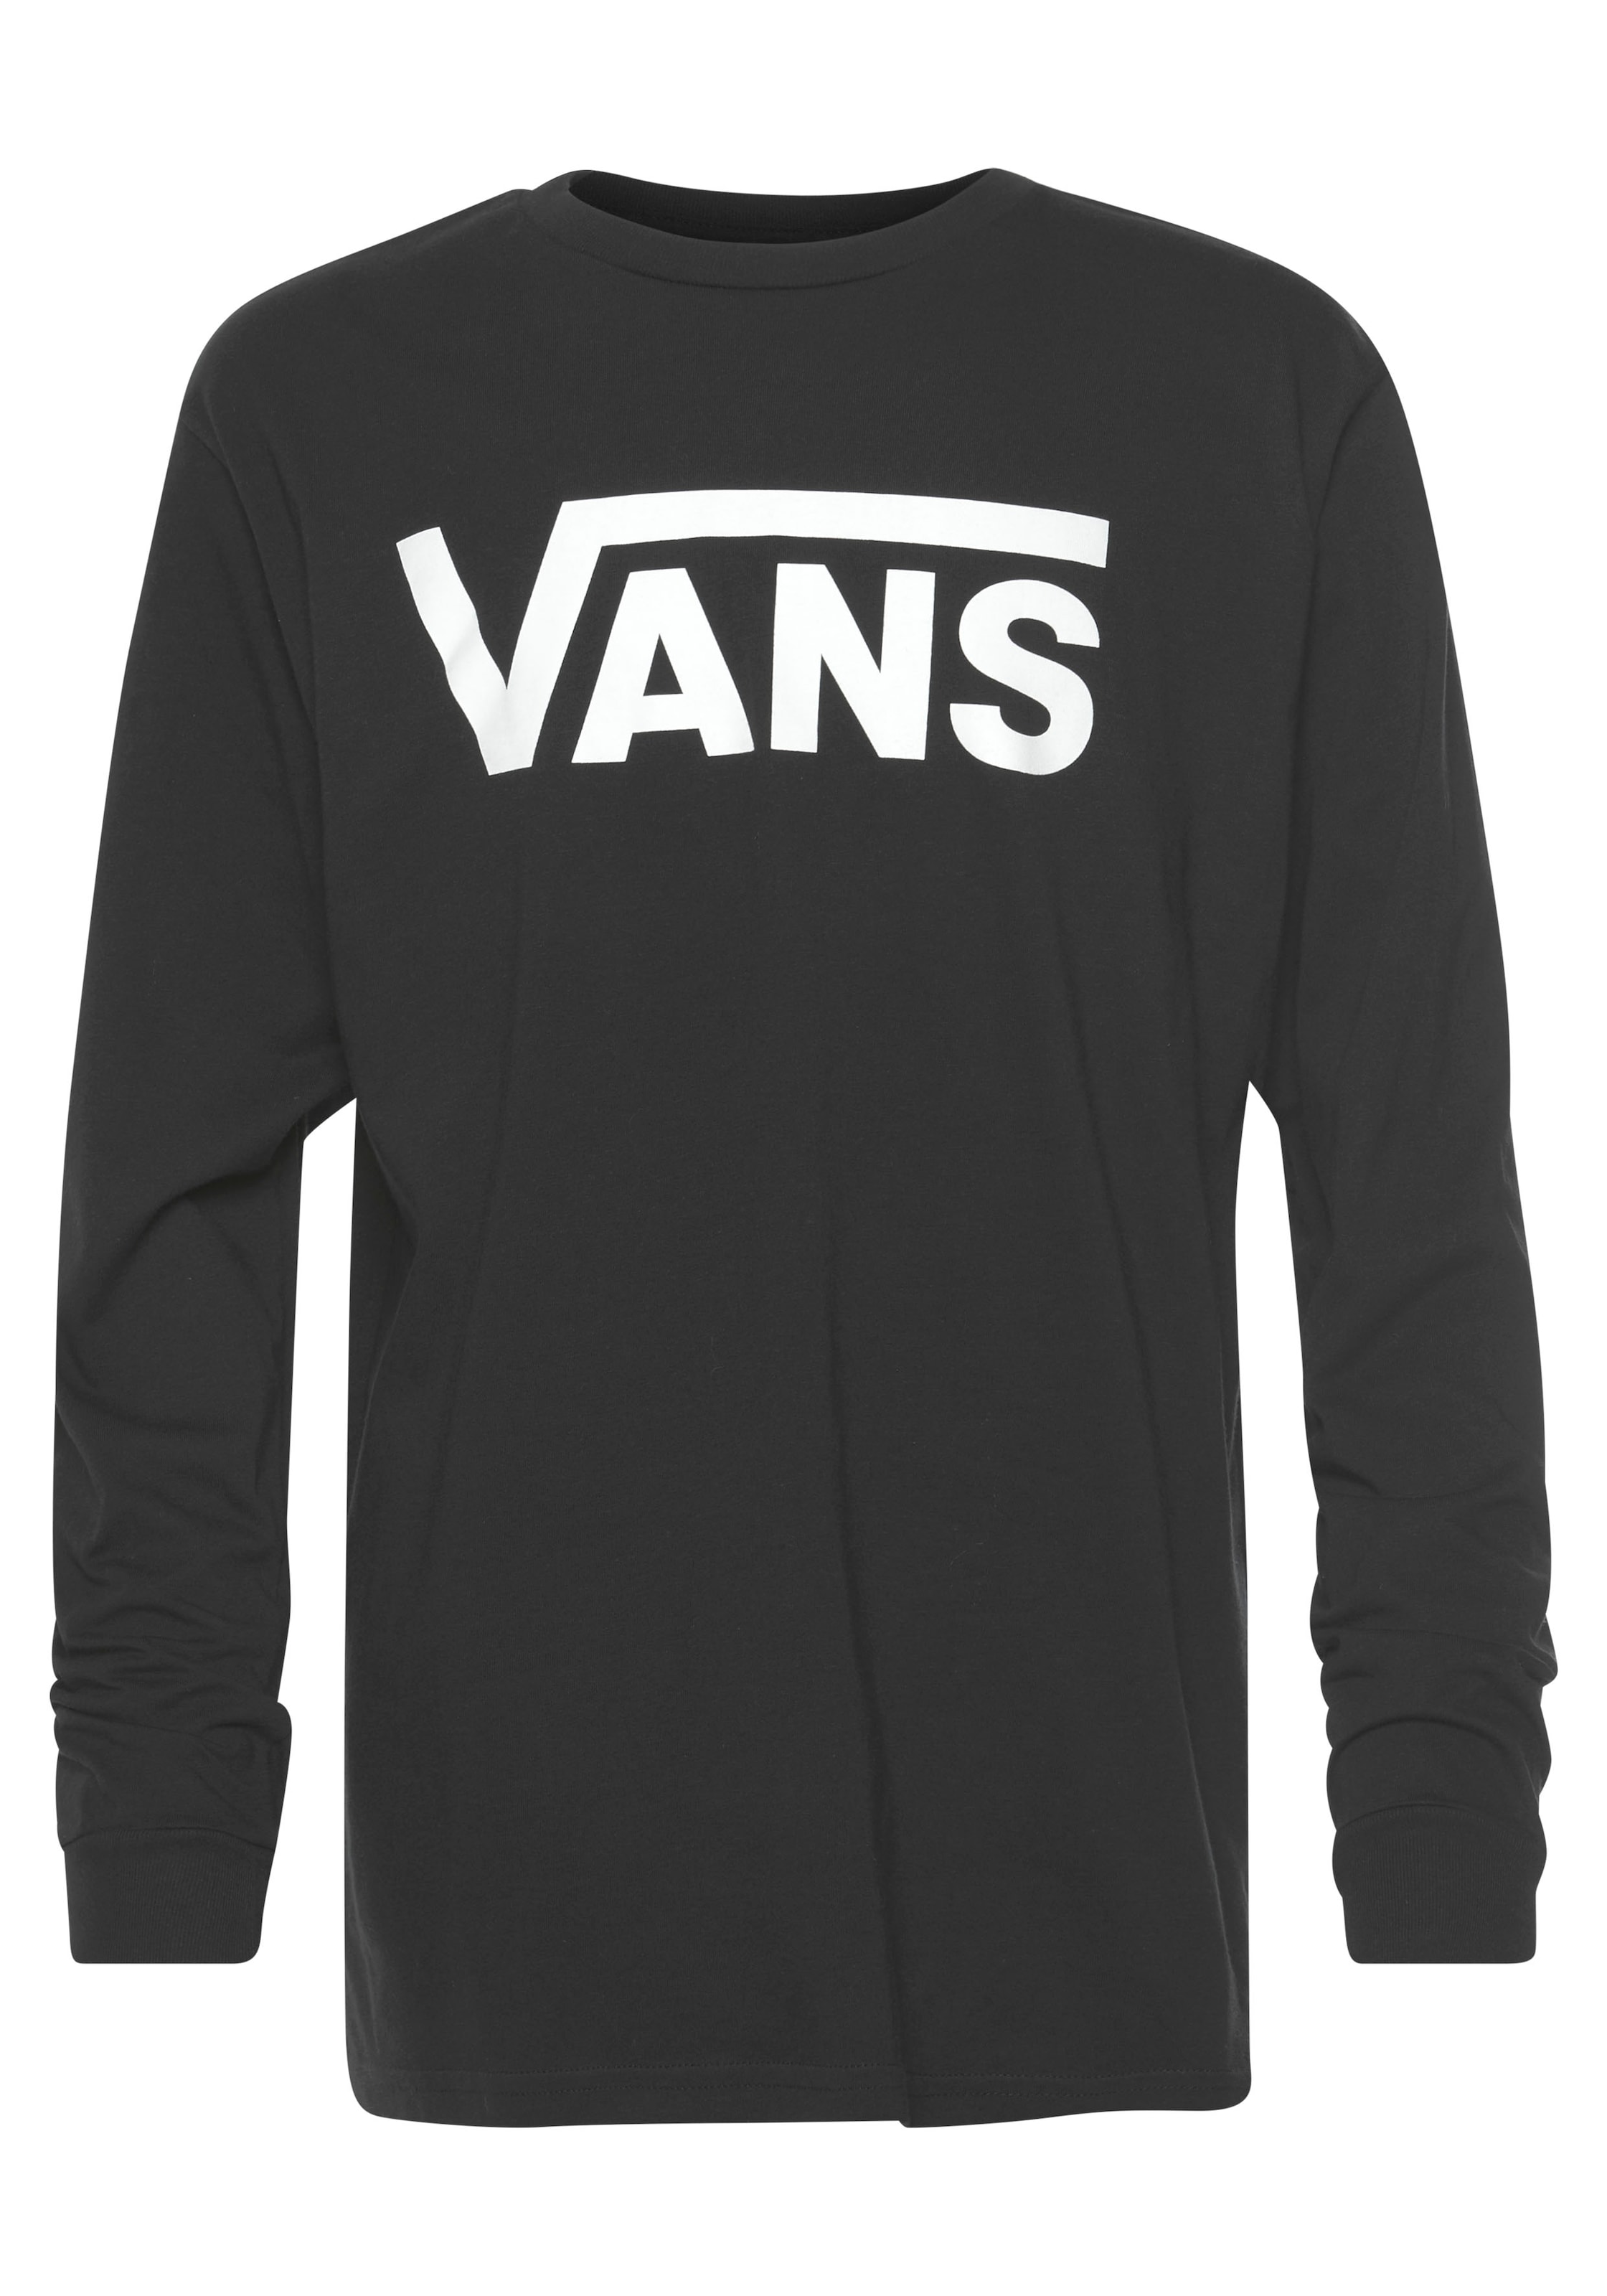 LS Vans »VANS BOYS« bestellen CLASSIC Langarmshirt